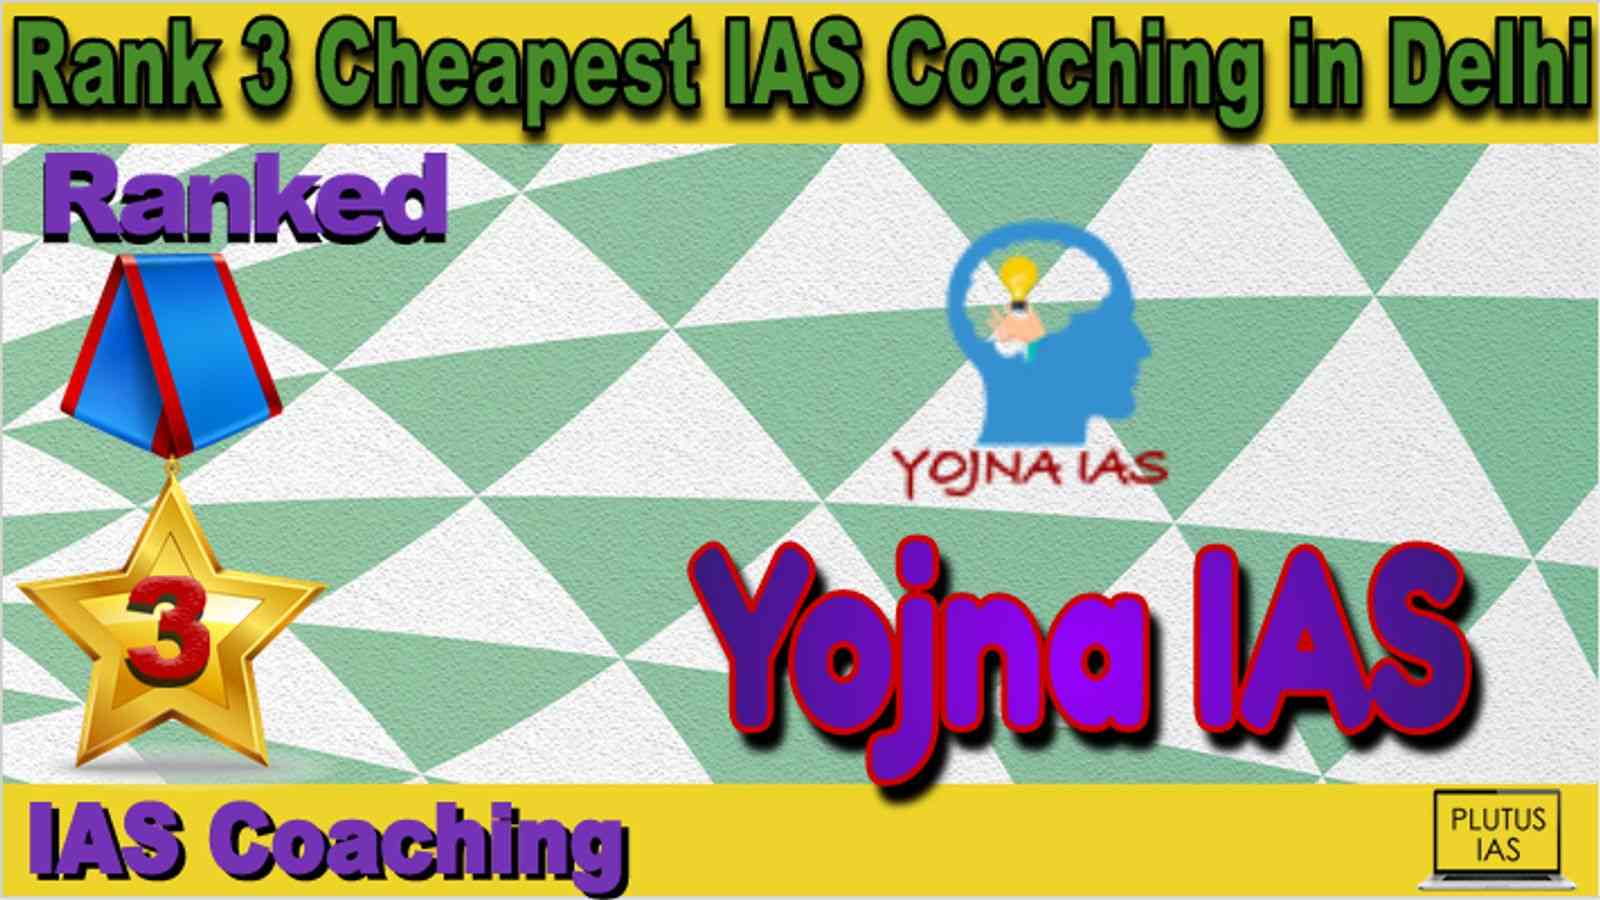 Rank 3 Cheapest IAS Coaching in Delhi